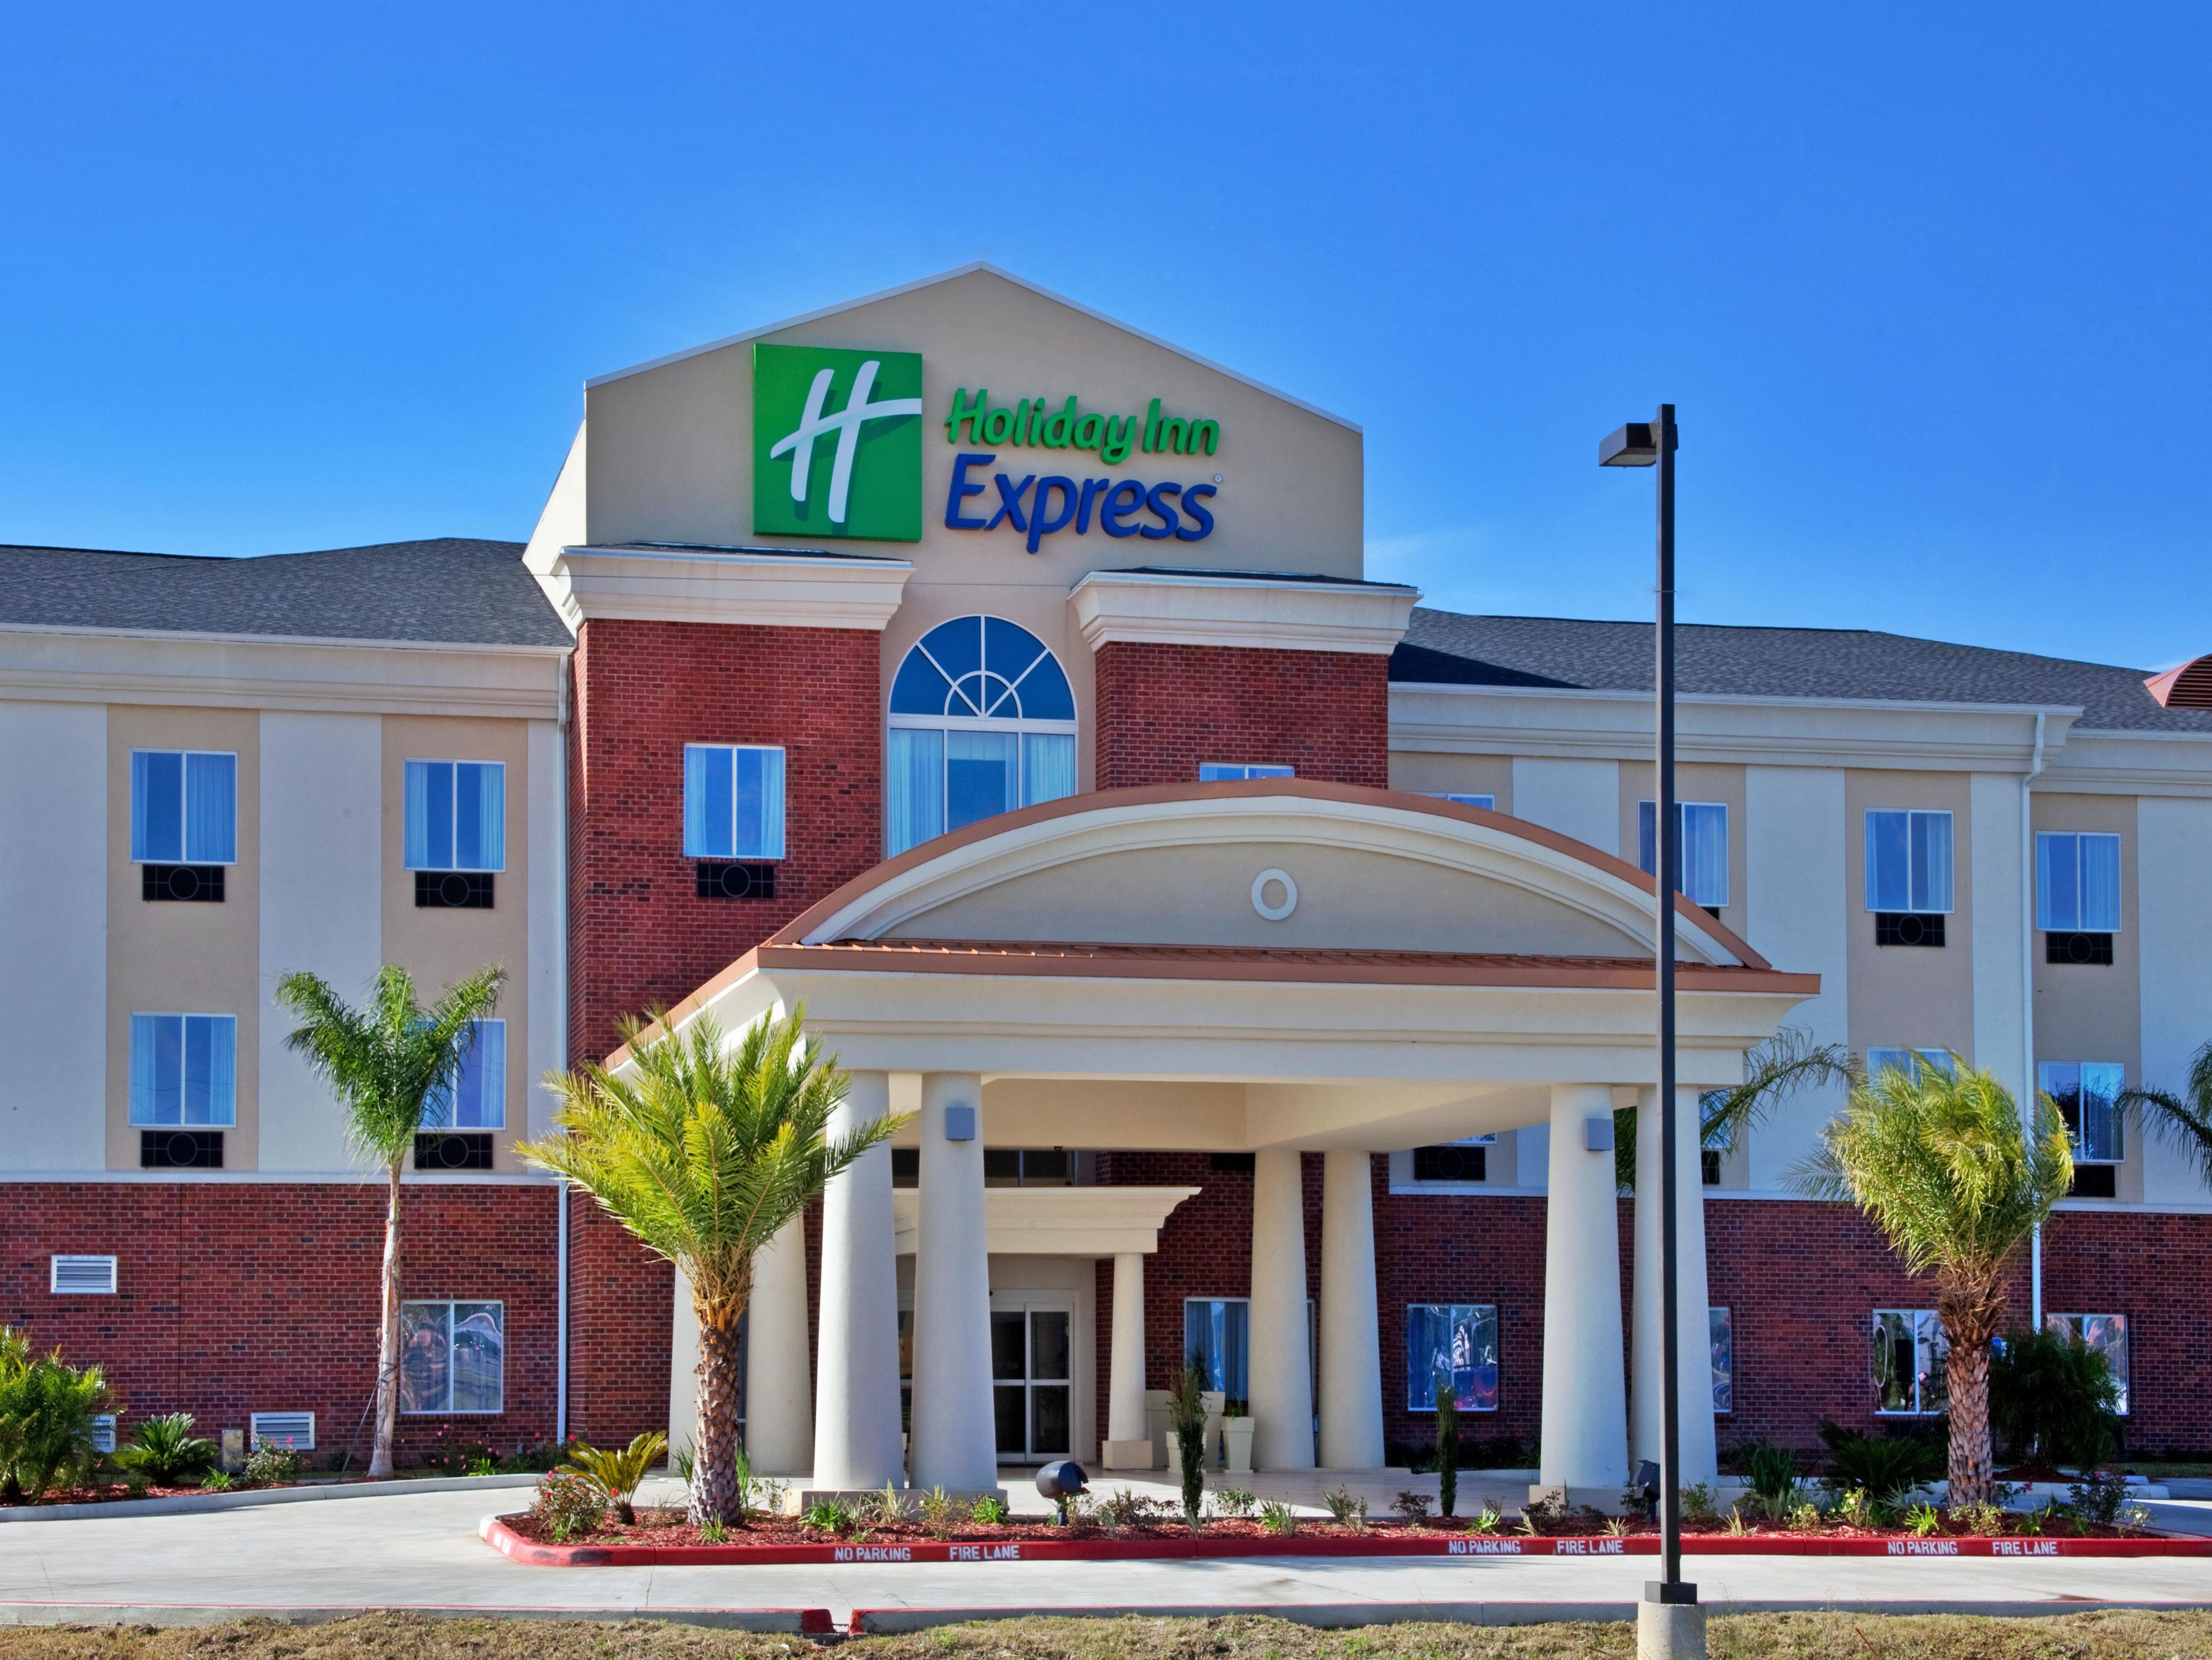 Hotels in Eunice, LA Area | Holiday Inn Express Eunice